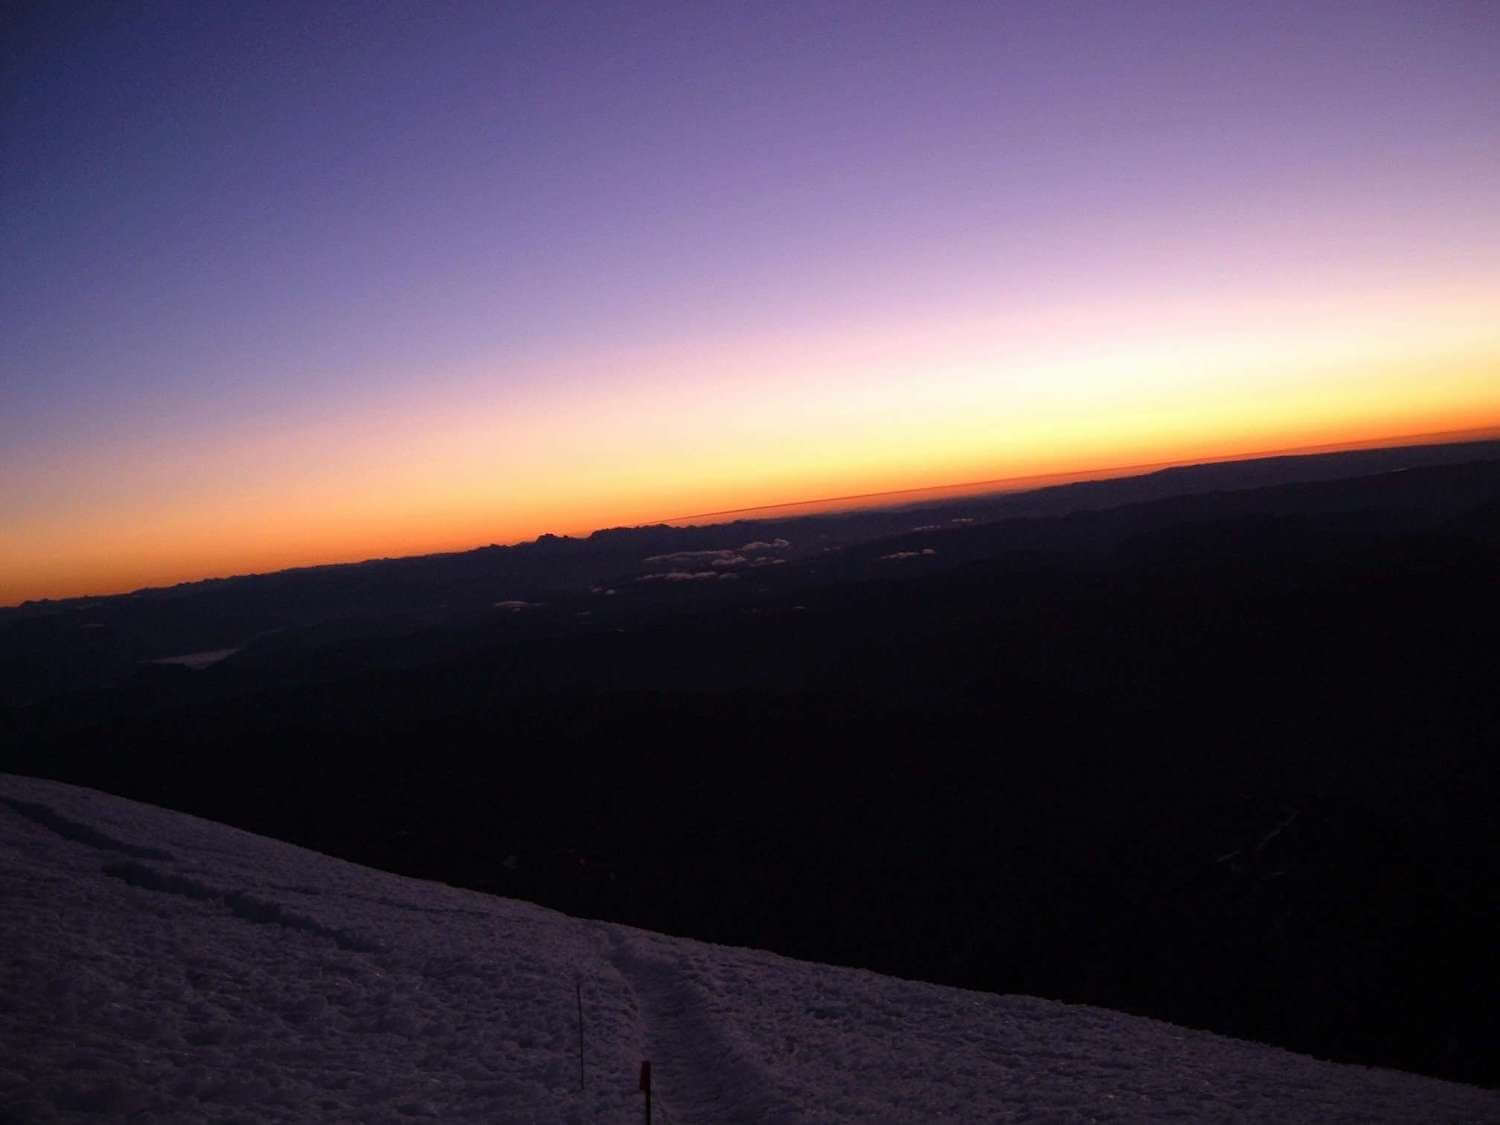 Sunrise over Washington State from the summit of Mt. Rainier